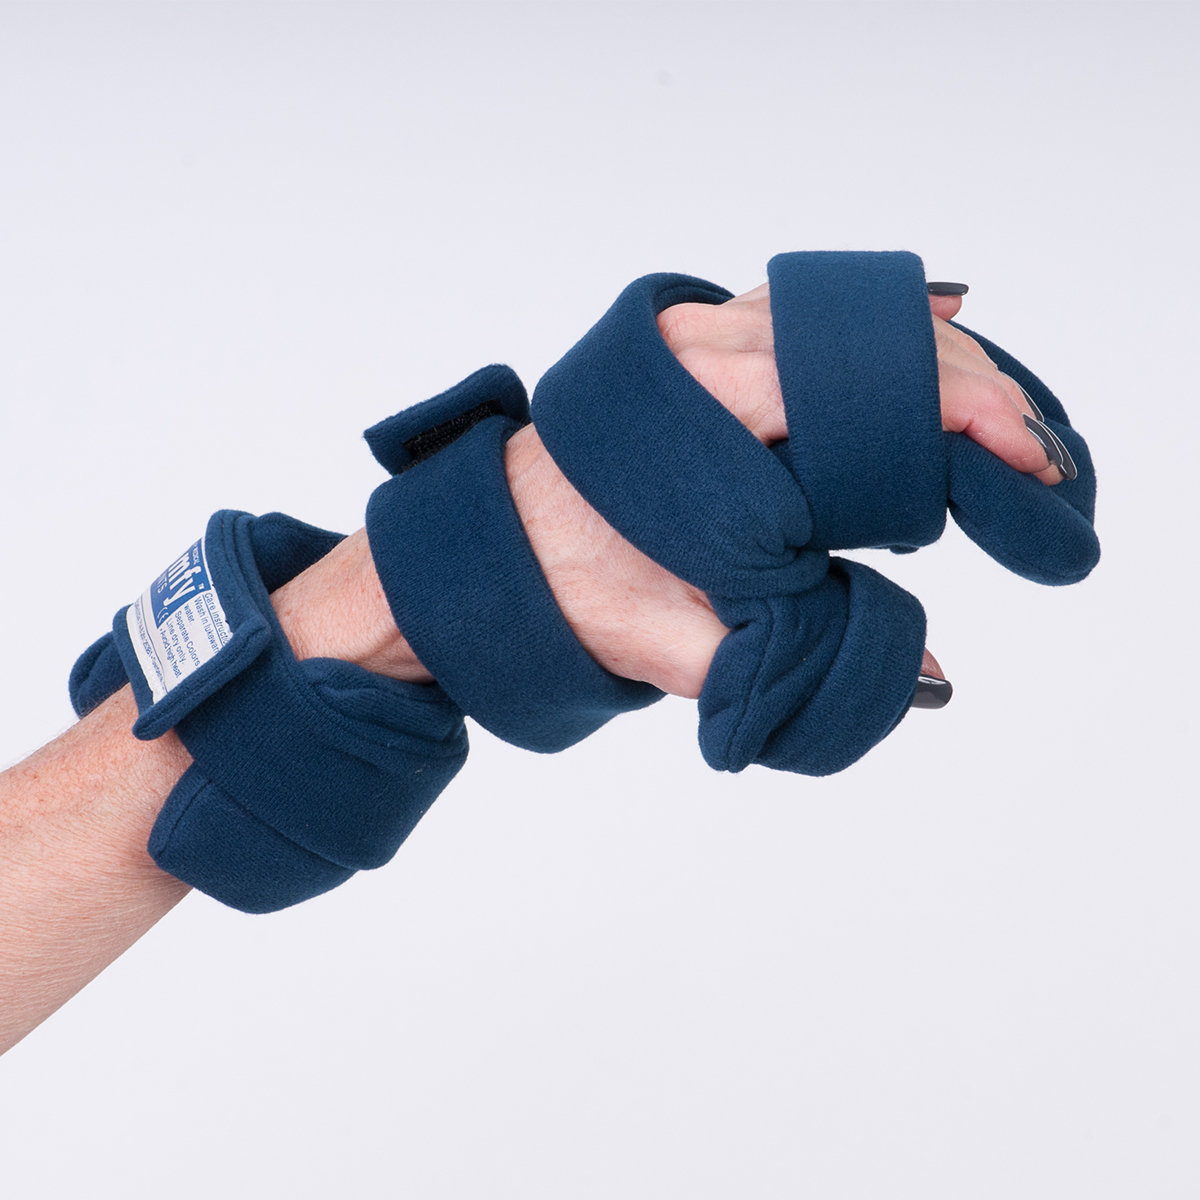 Comfy Adult Dorsal Hand Orthosis, SOFT CTS Dorsal Splint, 1 Wrist